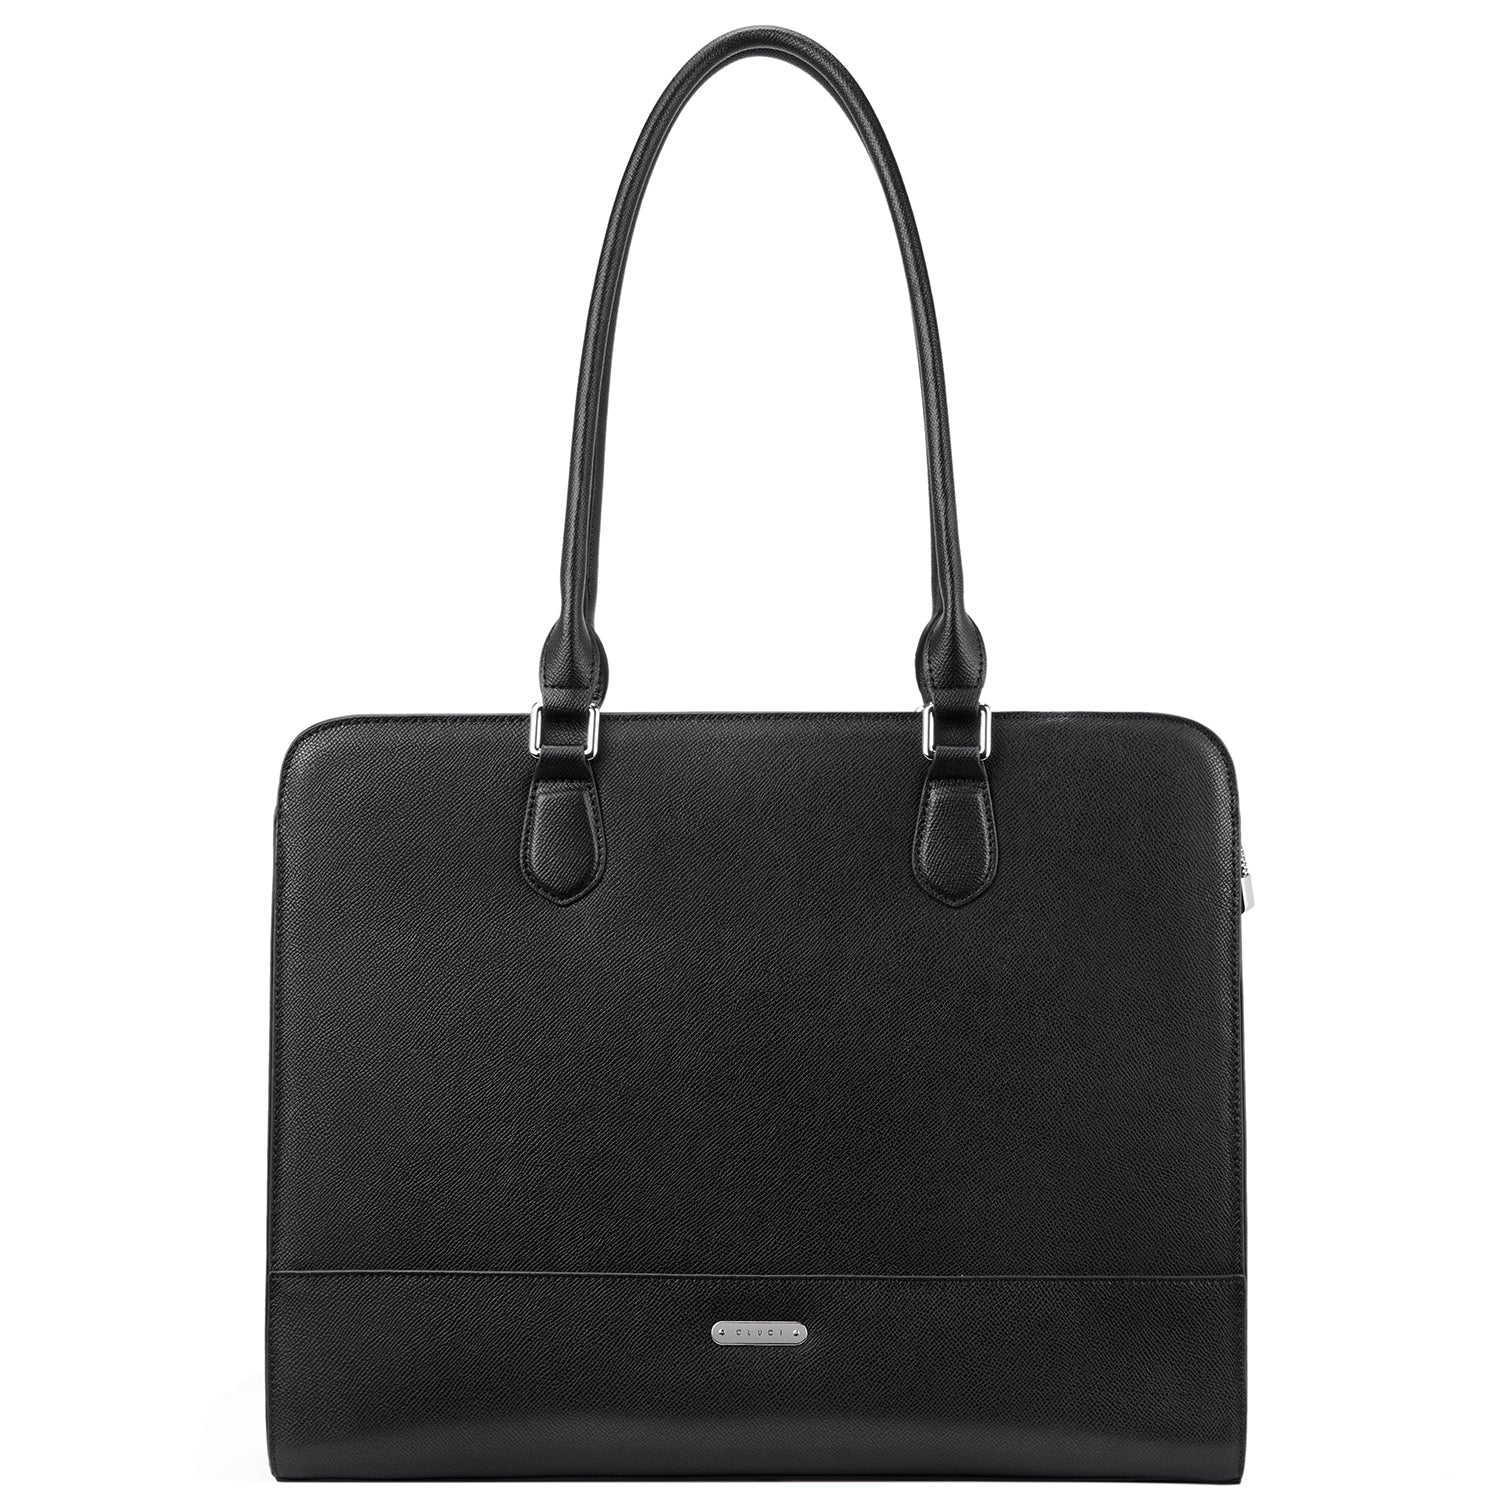 Lauren Designer Leather Briefcase For Women For Commuting